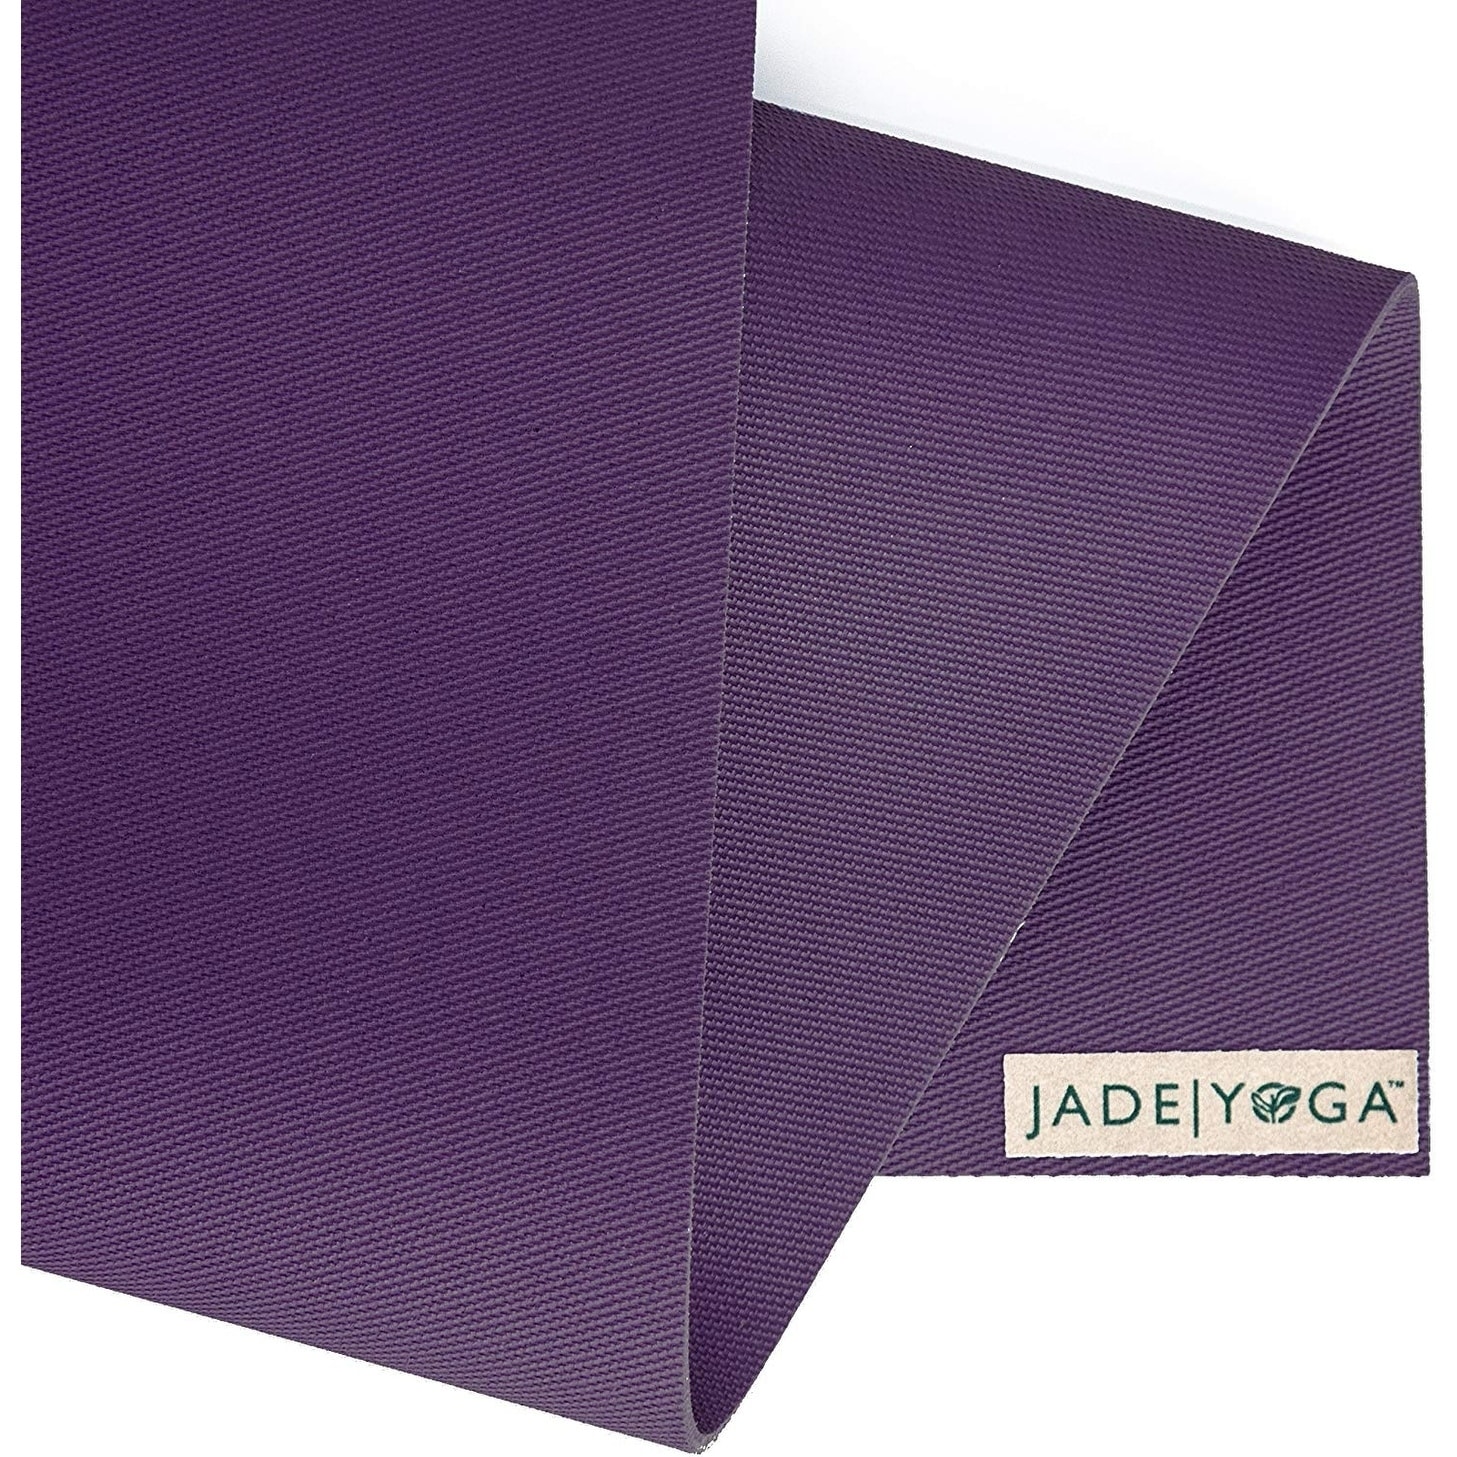 Jade Yoga 868P Travel Mat, Purple, 1/8 24 x 68